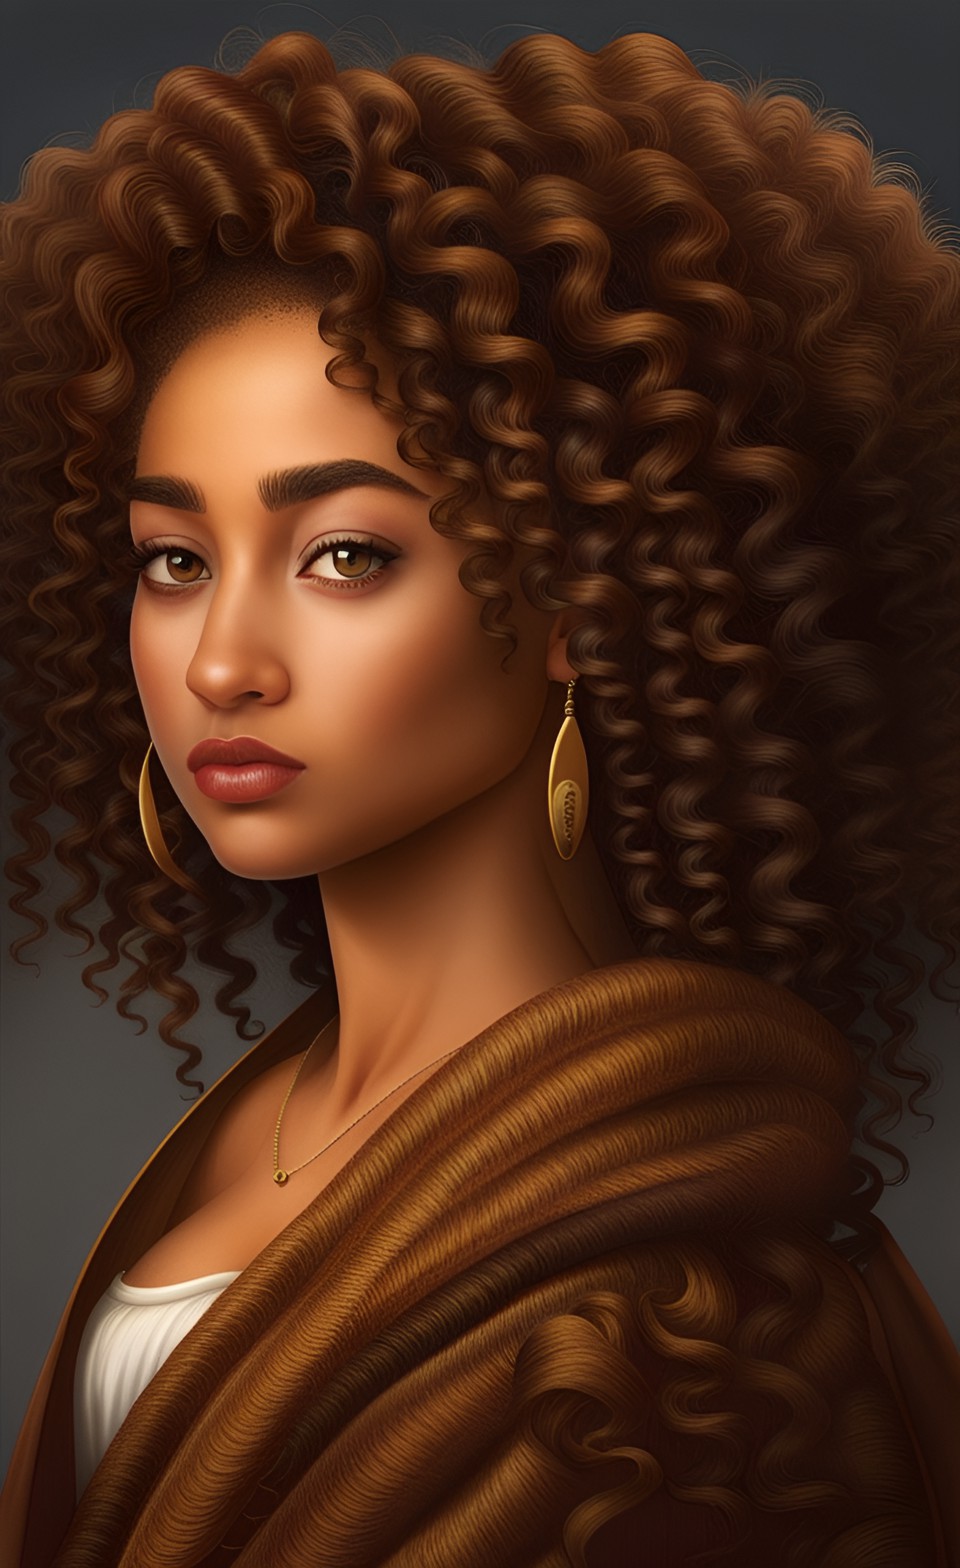 Beautiful iconic art work of mixed-race women Dreamc50